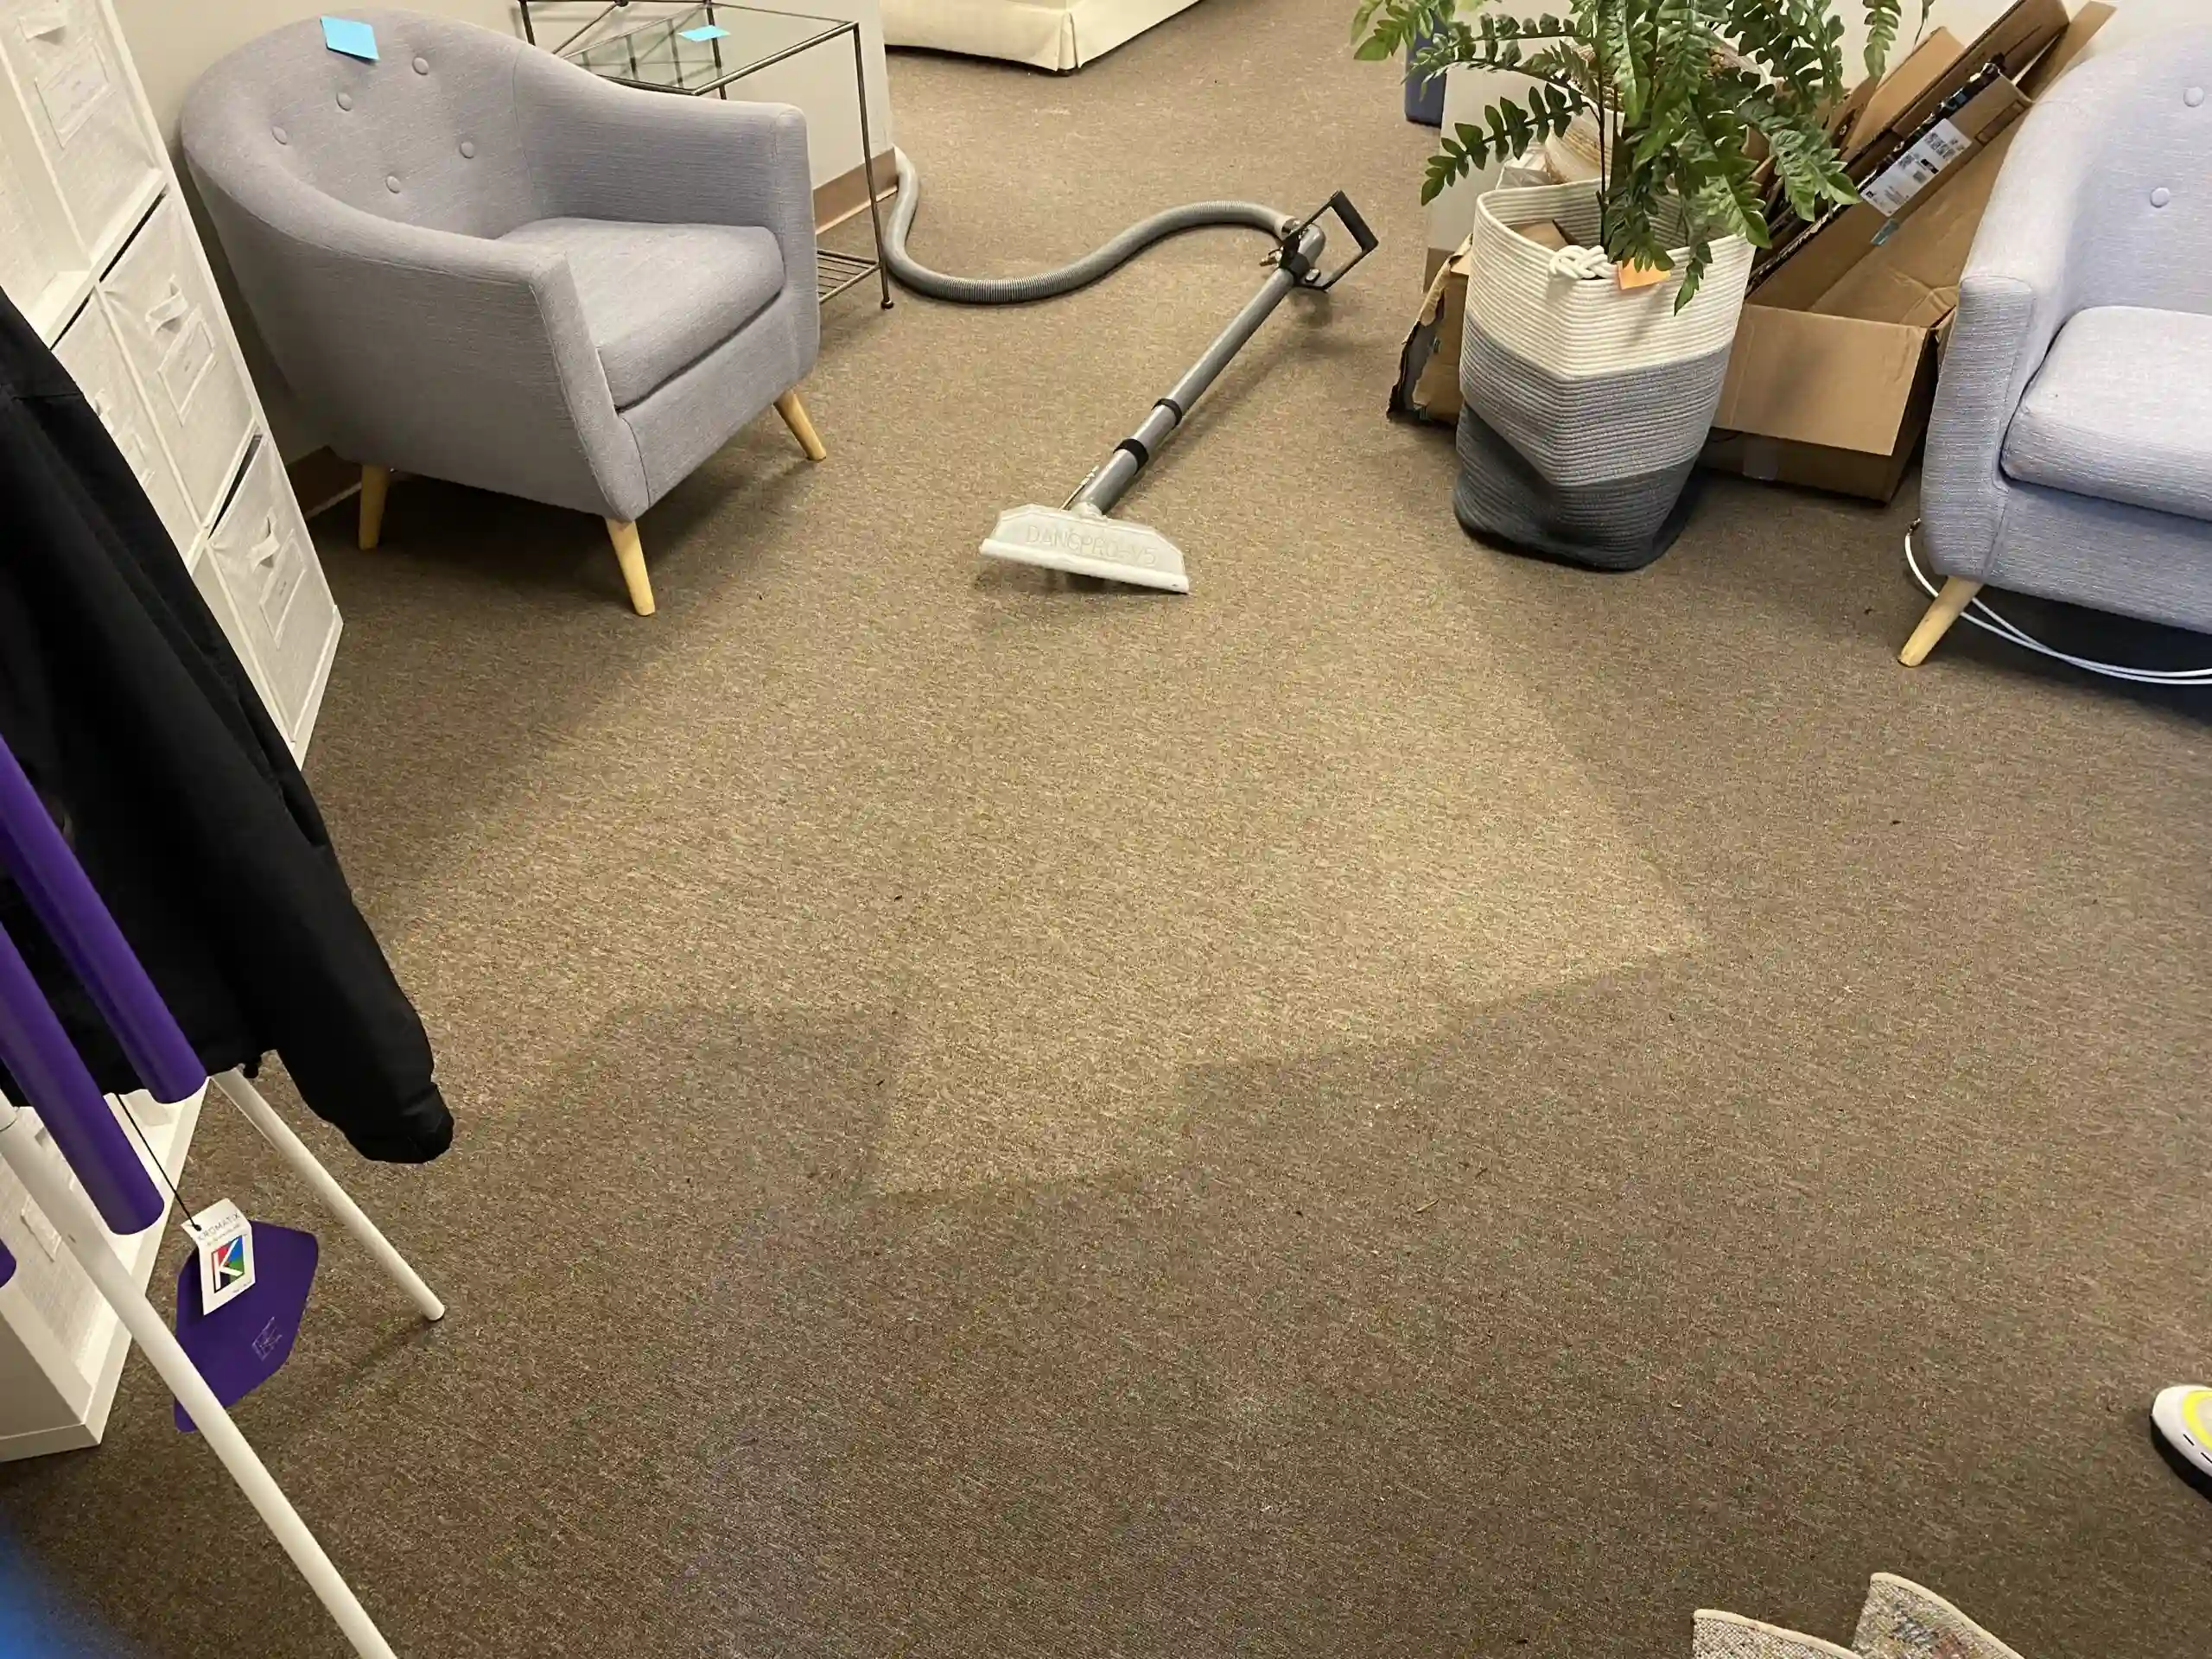 Carpet cleaner